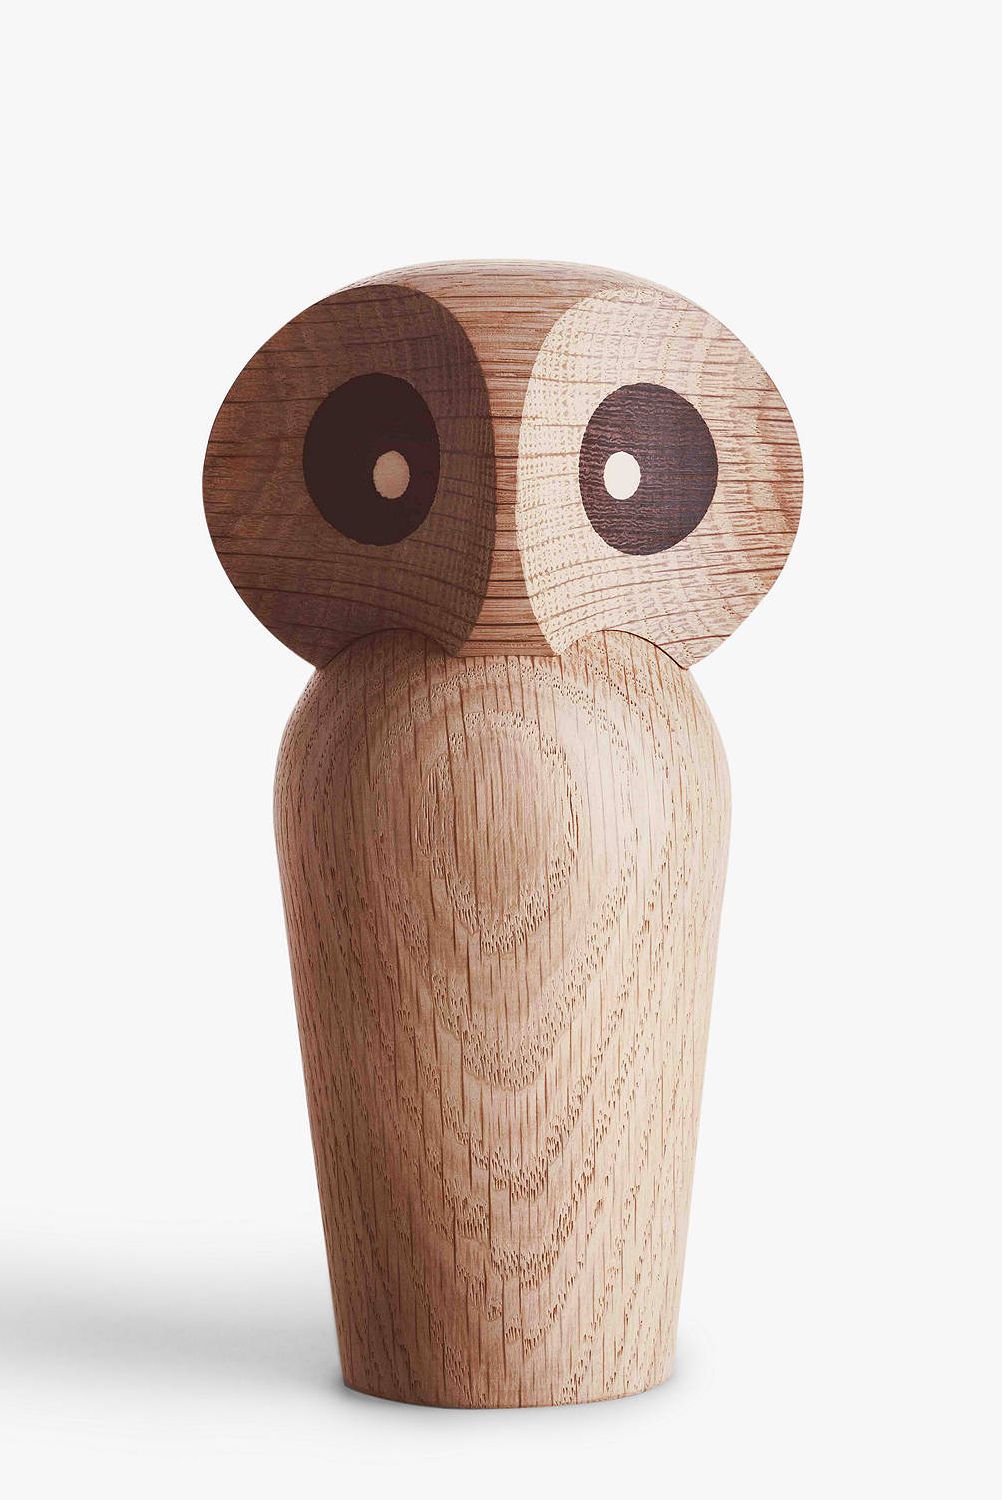 Architectmade wooden owl